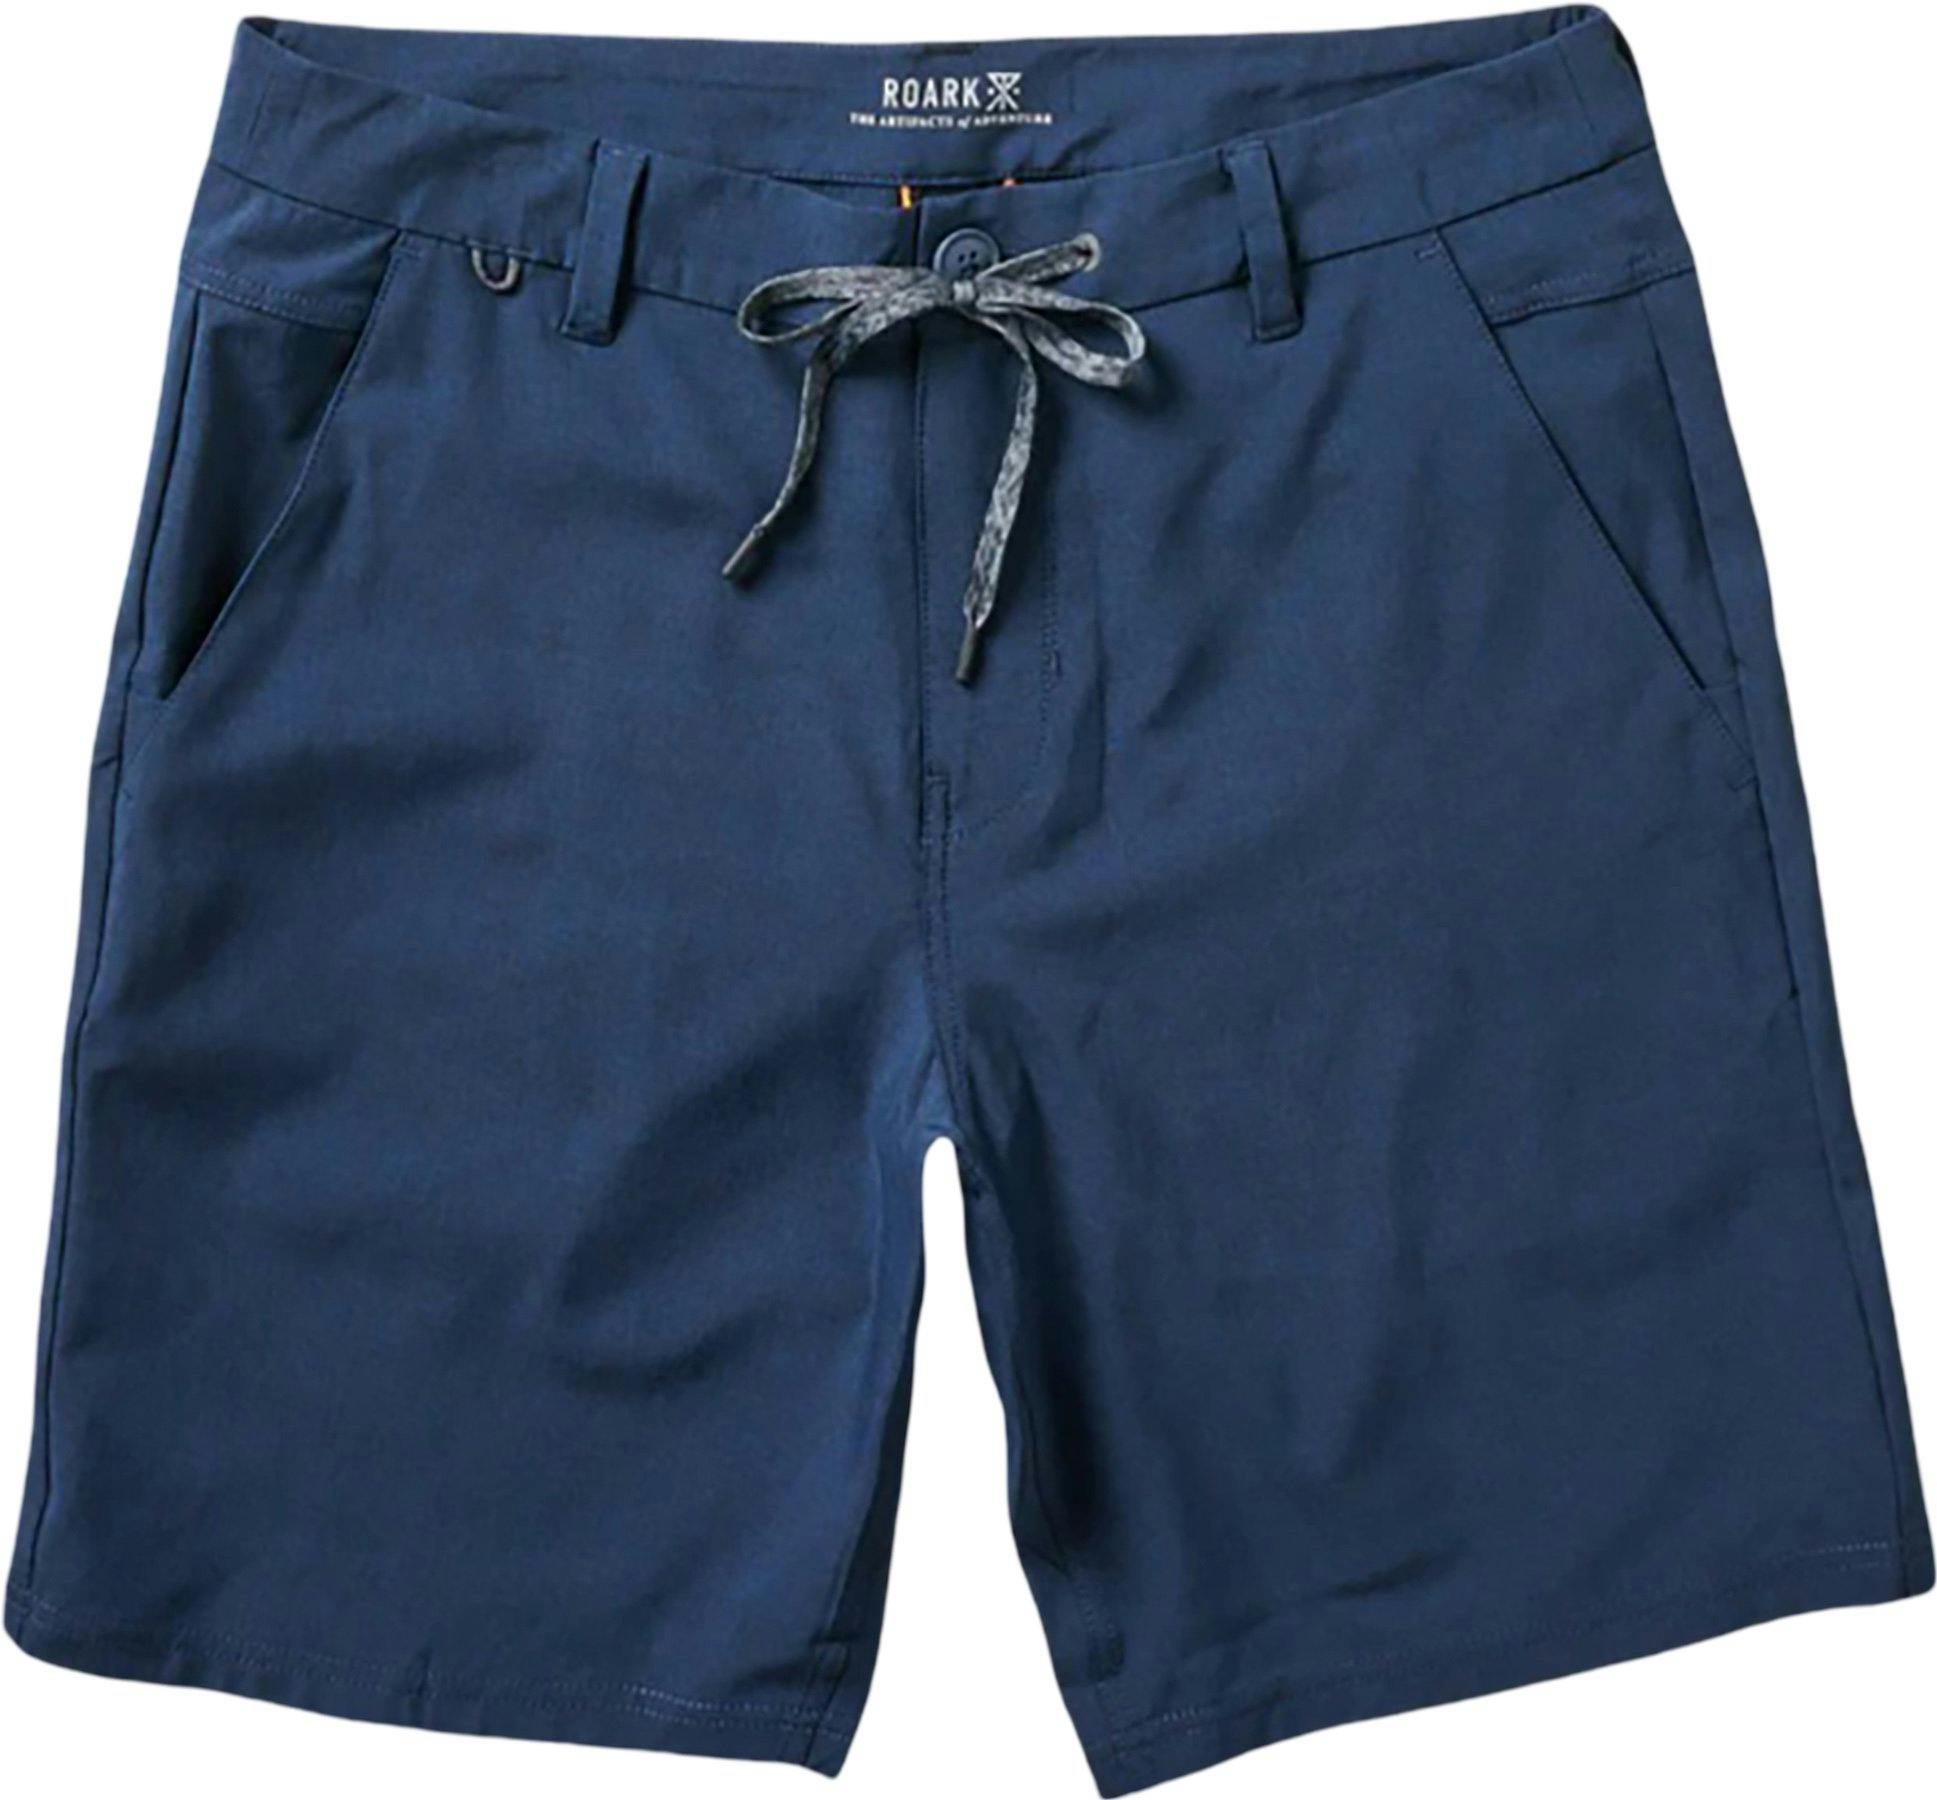 Product image for Explorer 2.0 Hybrid Stretch Shorts 19'' - Men's